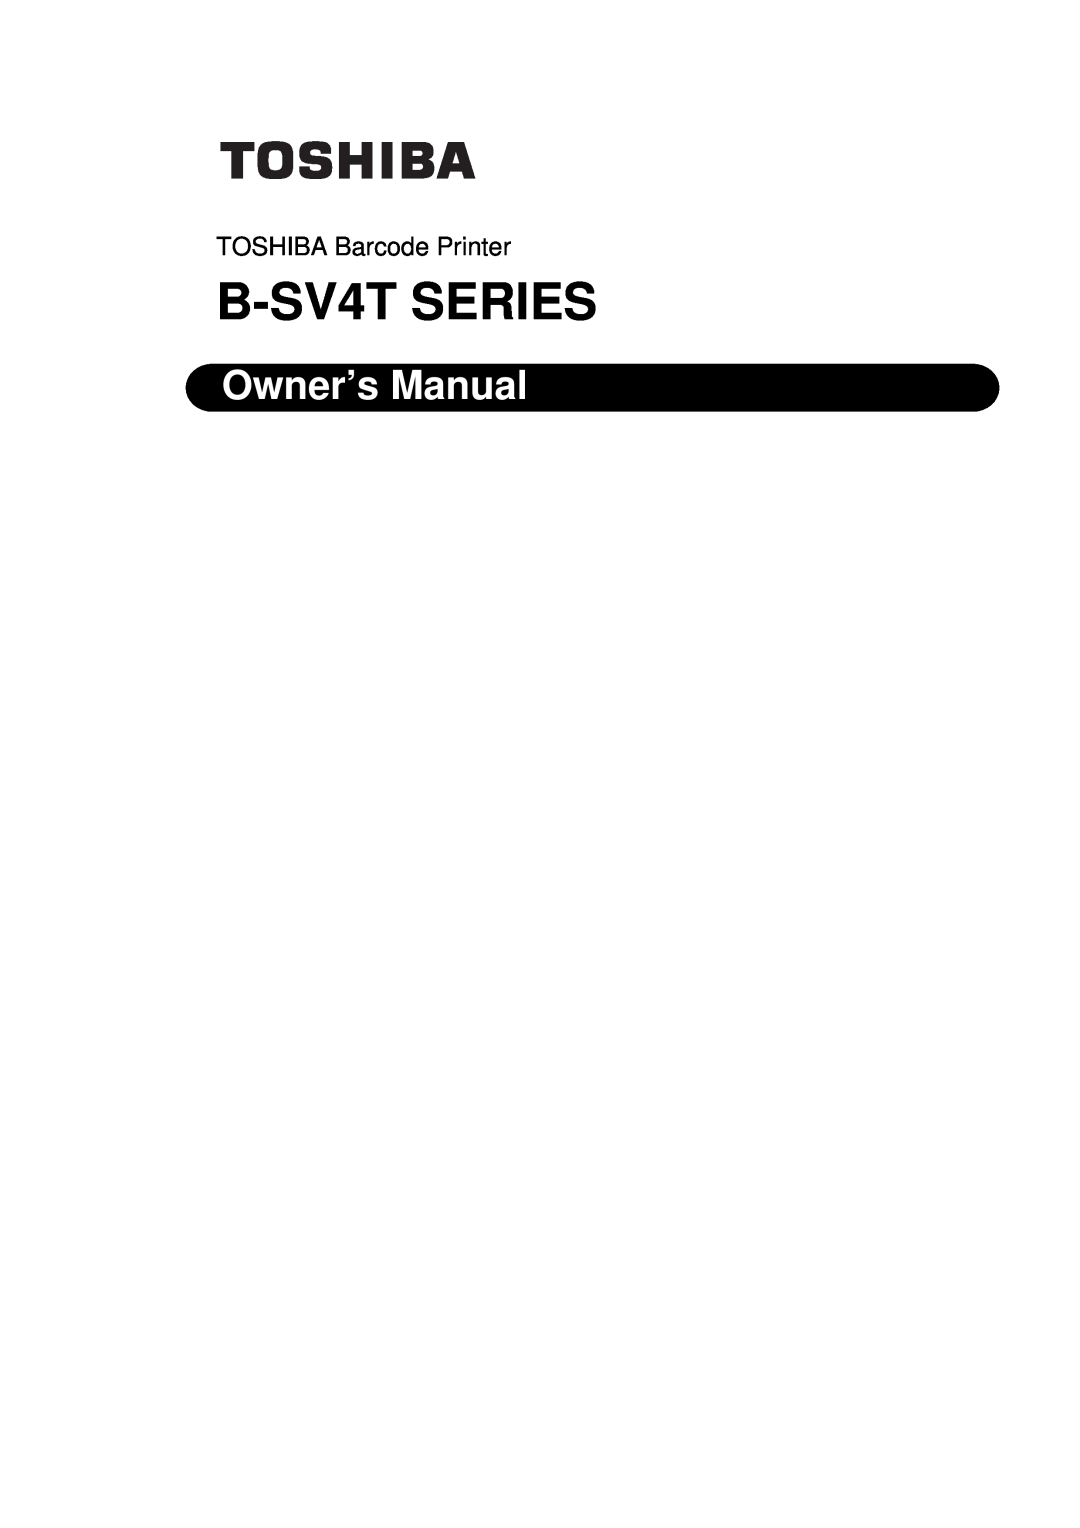 Toshiba owner manual B-SV4T SERIES, Owner’s Manual, TOSHIBA Barcode Printer 